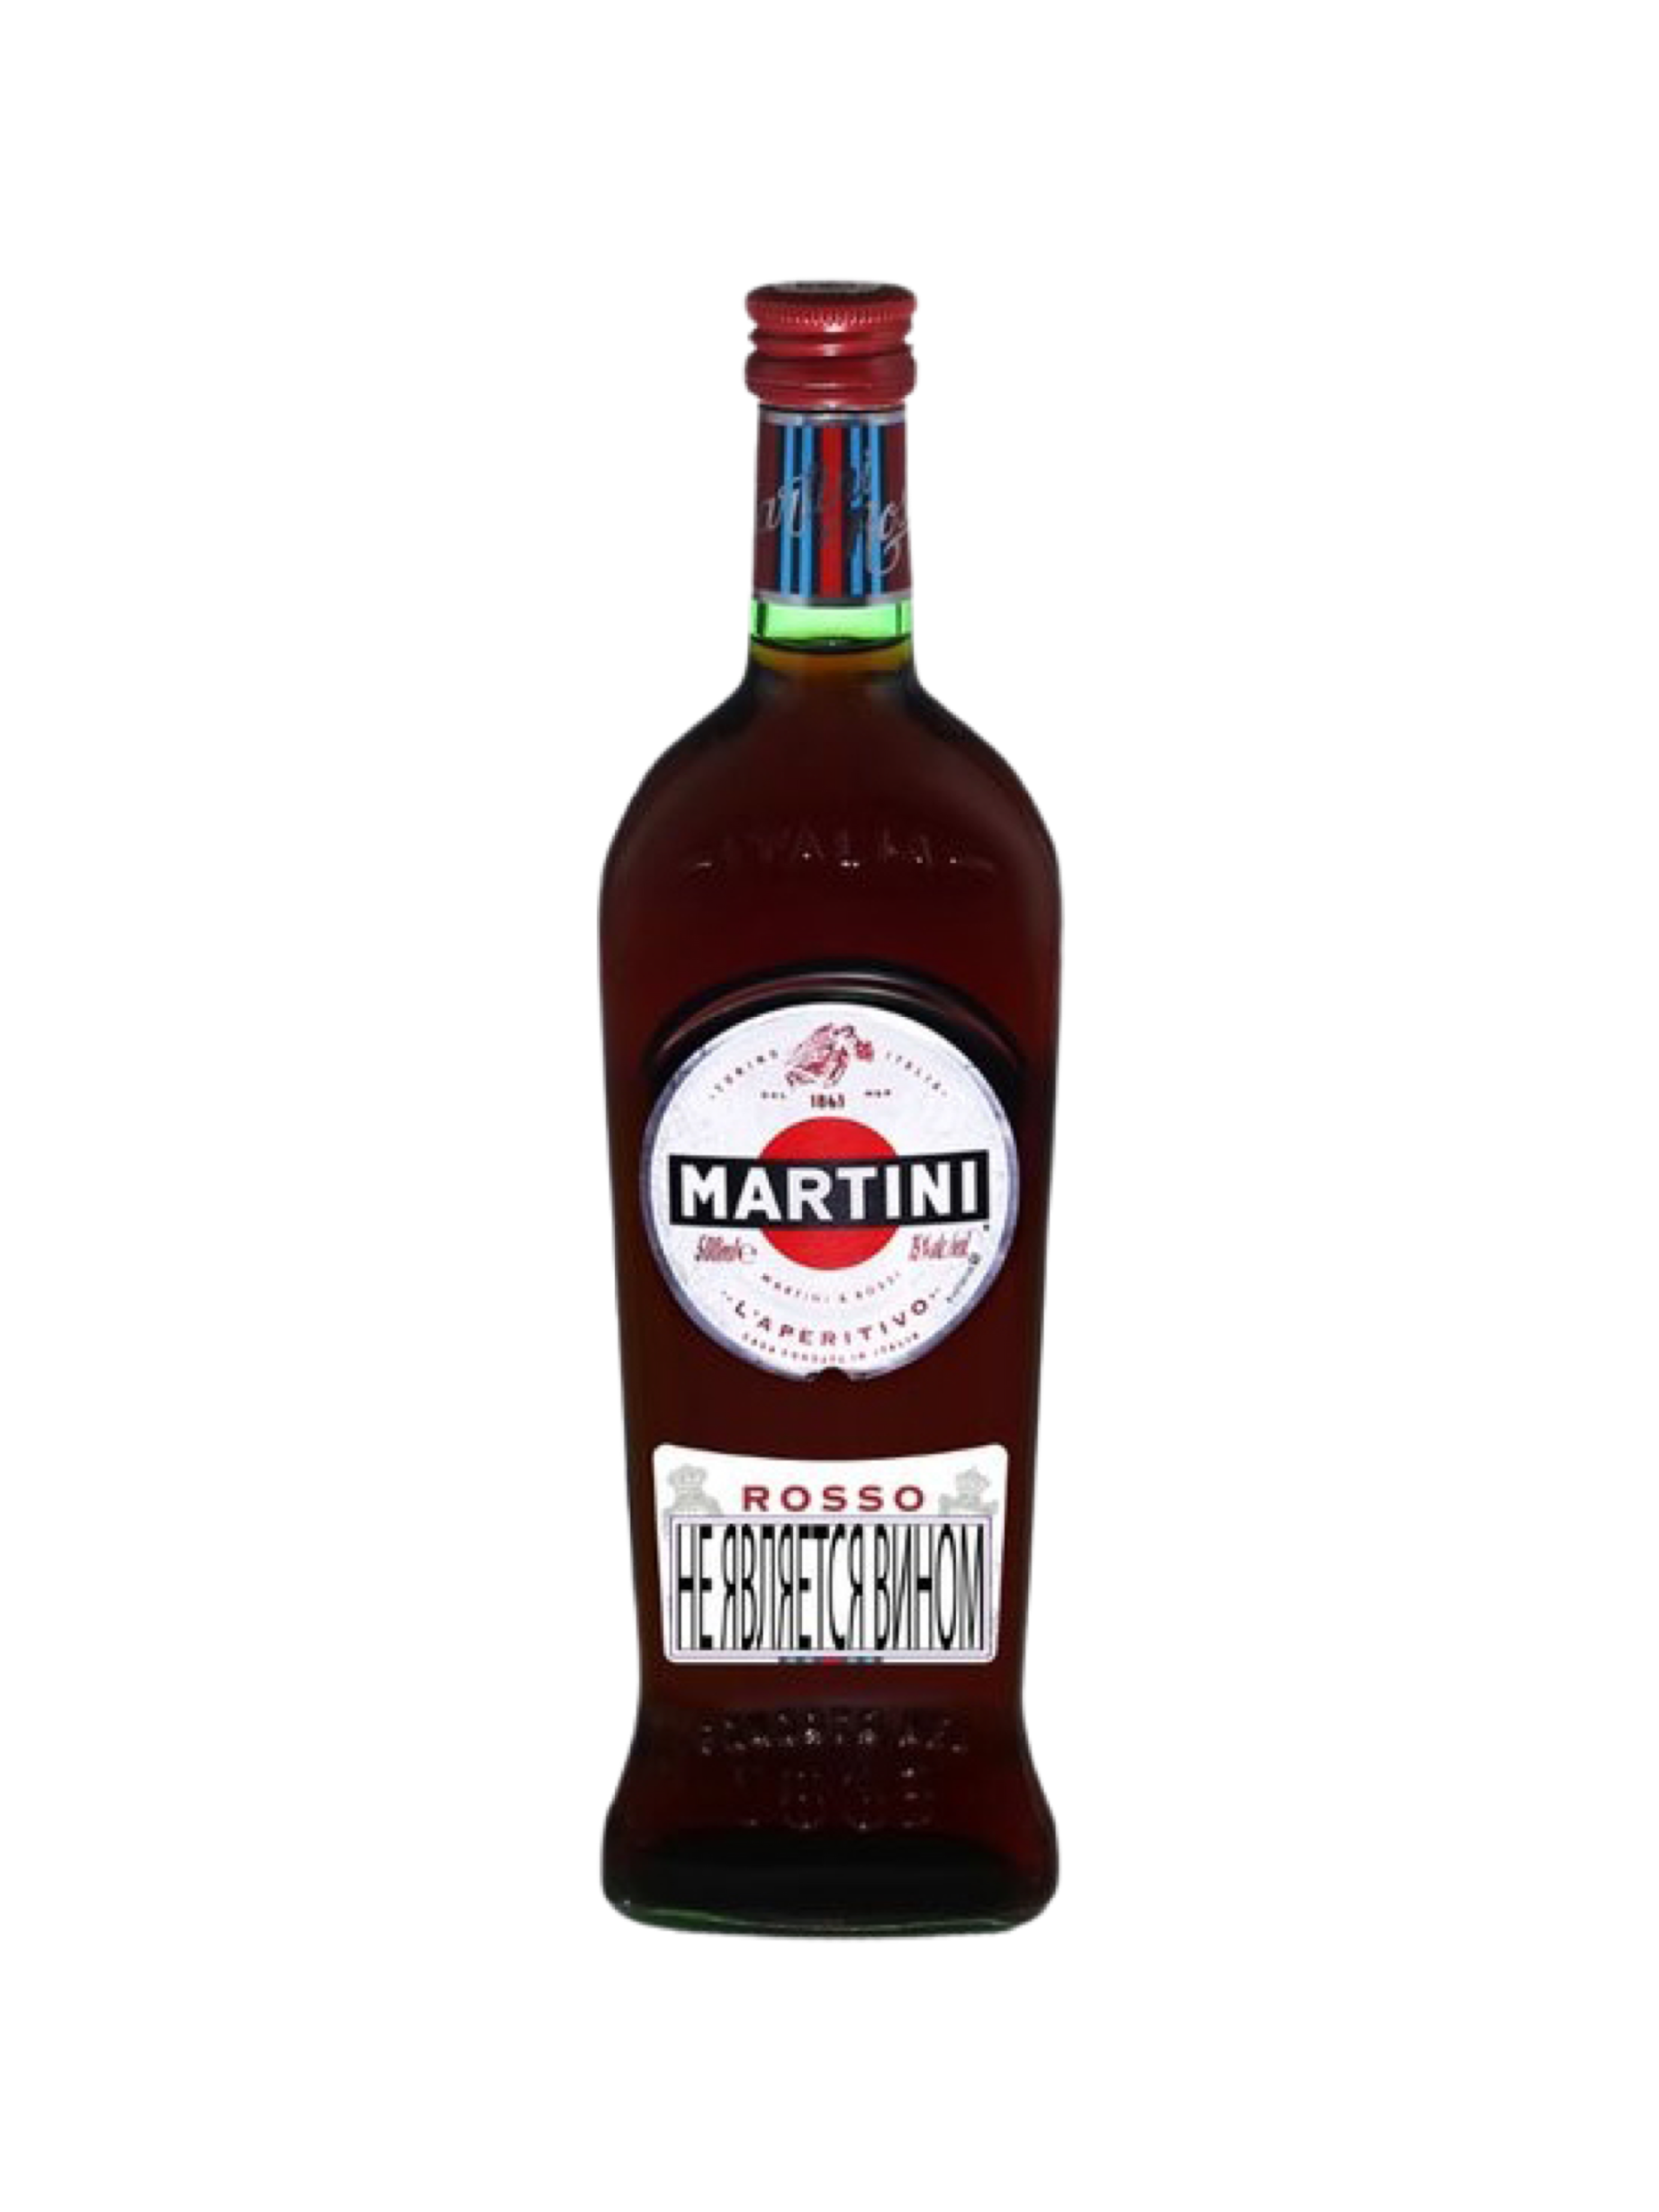 Напиток Мартини Россо ароматиз. виноградосодержащий 15% 0,5л (Италия)